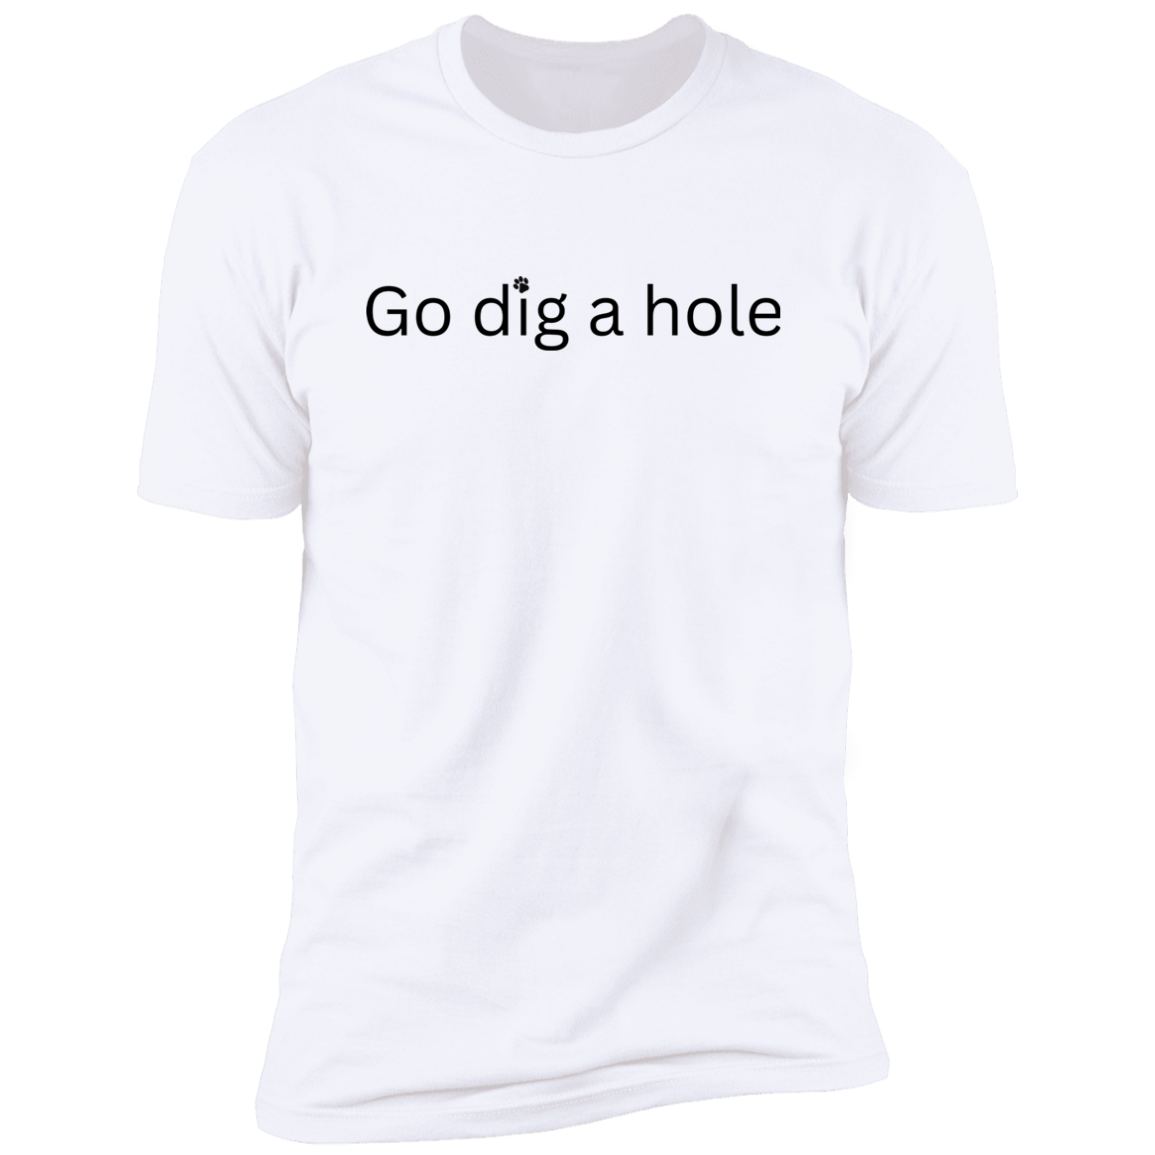 Go Dig a Hole Dog T-Shirt, Dog shirt for humans, funny dog shirt, funny t-shirt, in white